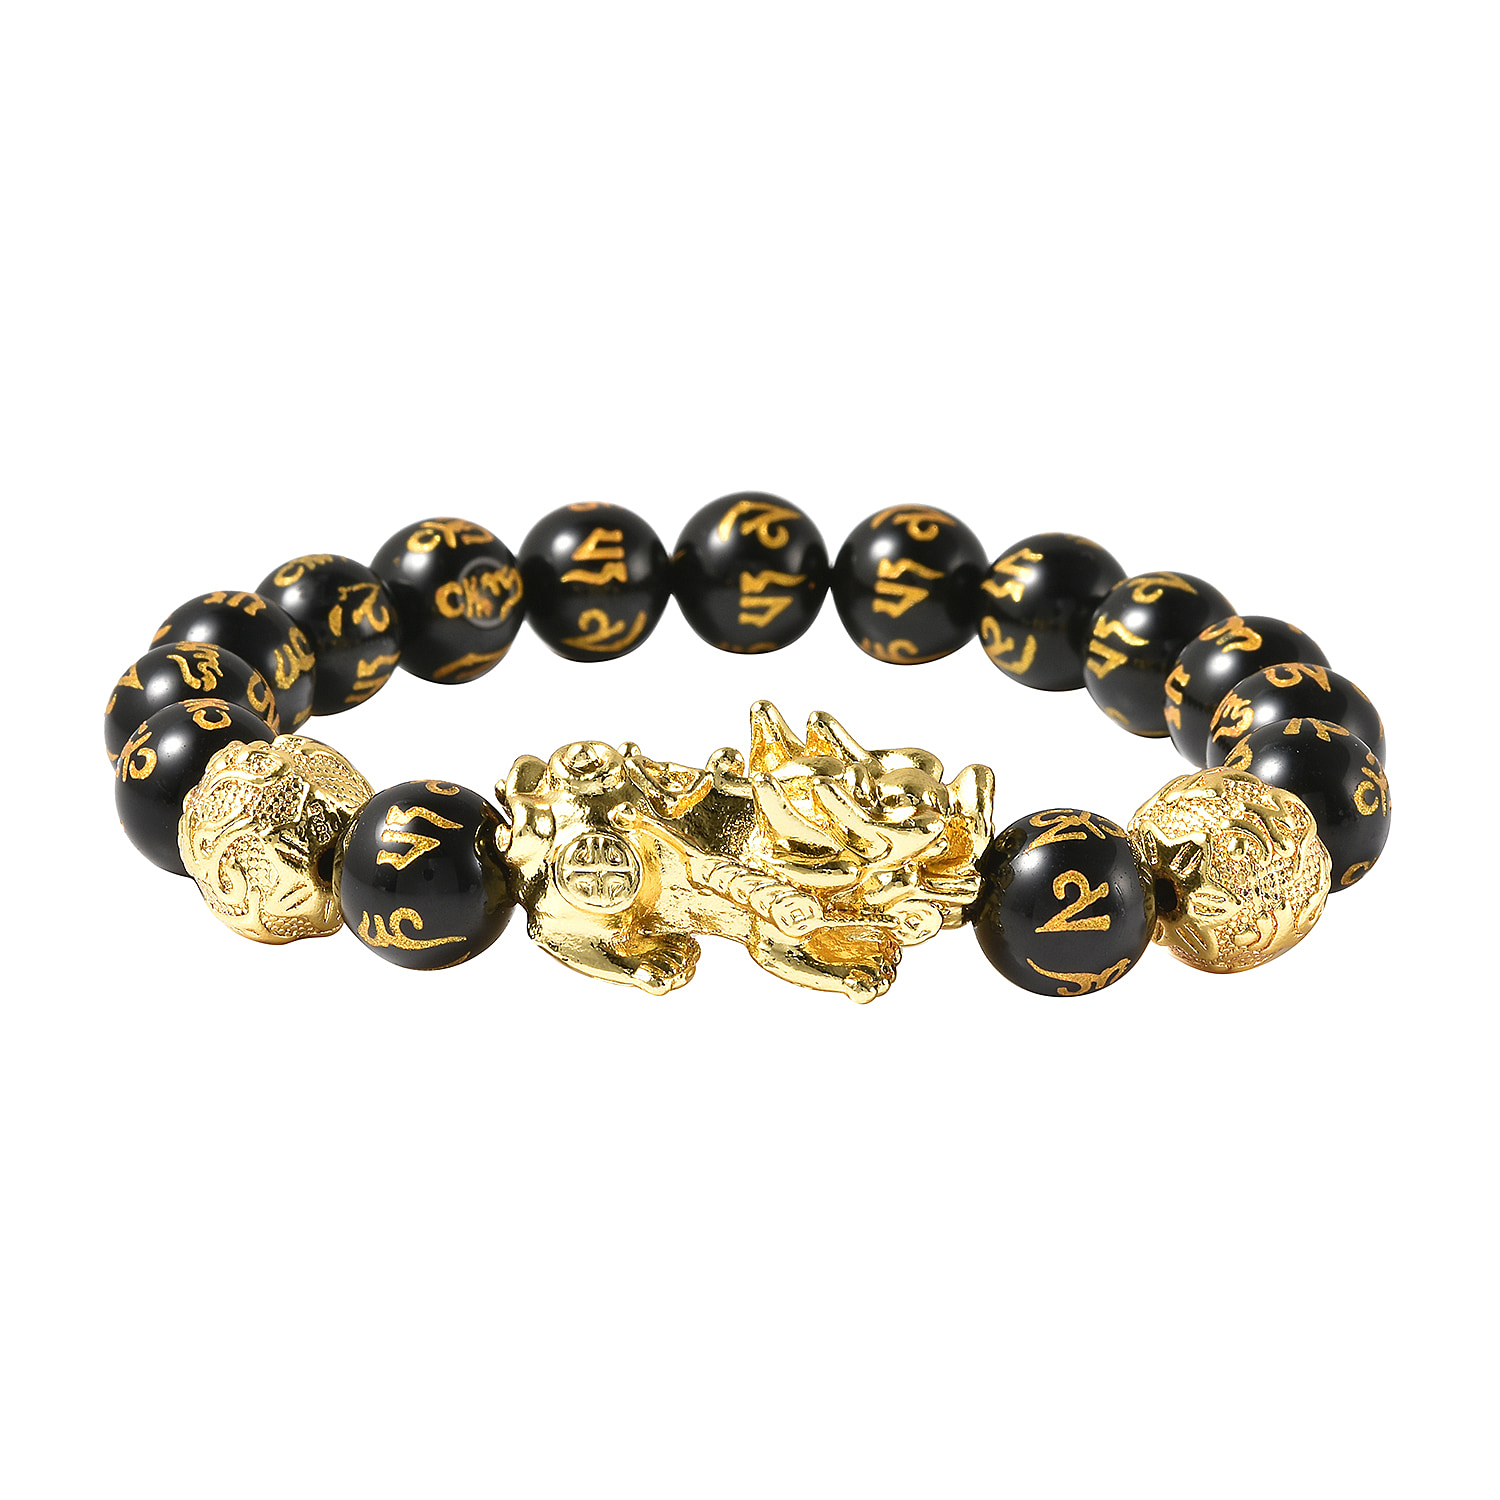 Black Obsidian Beads Bracelet with Gold PiXiu 黑耀石貔貅珠手串, Women's Fashion,  Jewelry & Organisers, Bracelets on Carousell